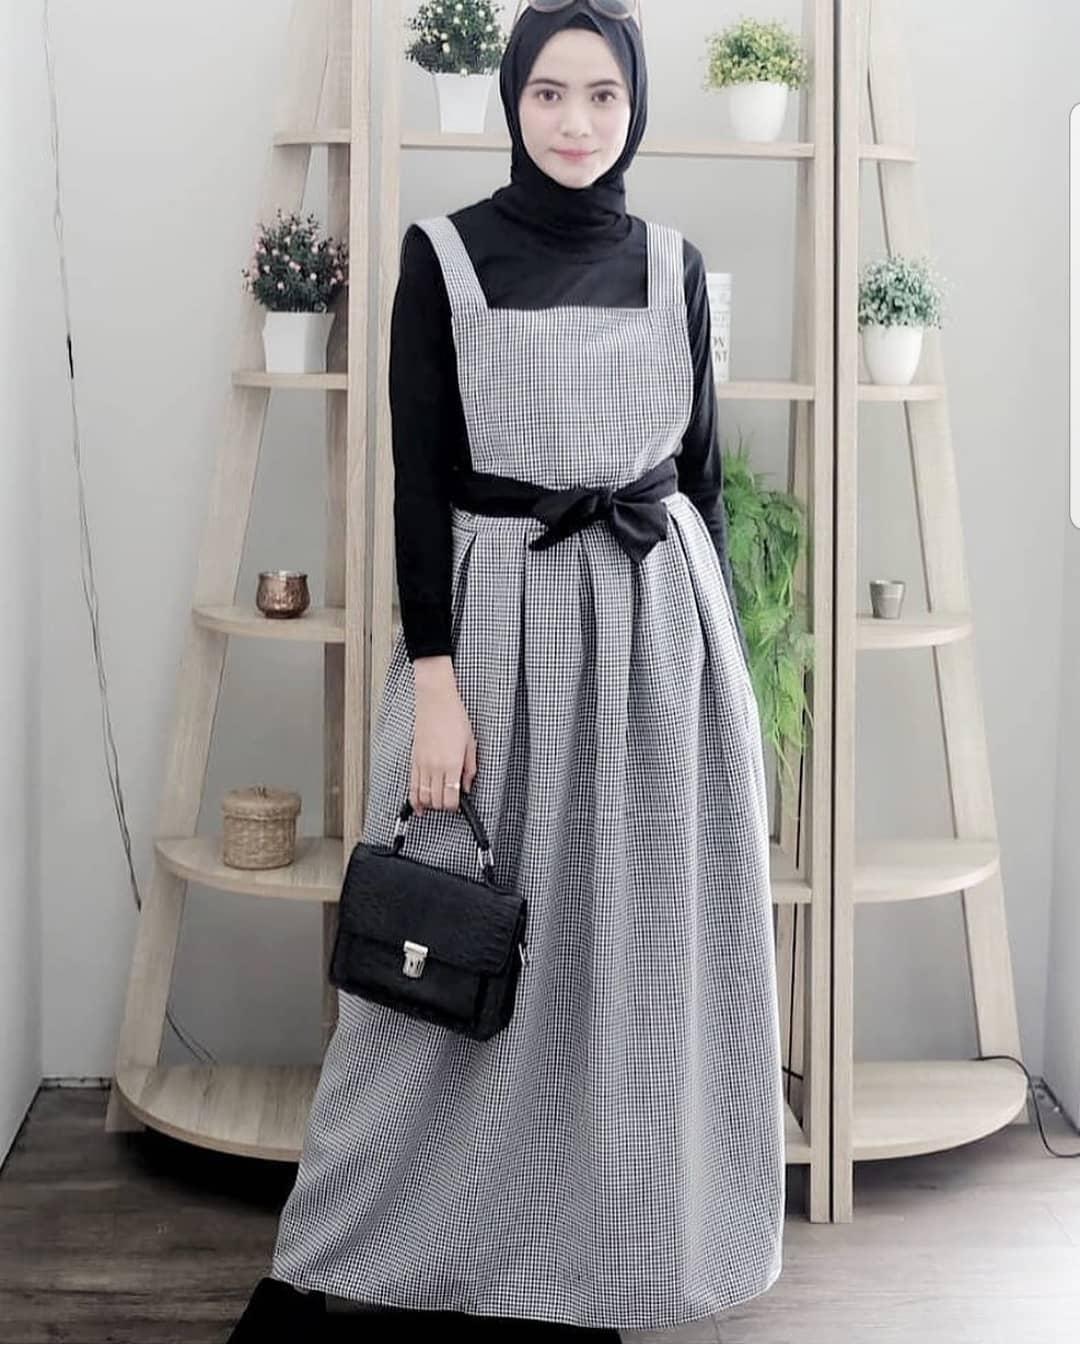 Baju Muslim Modern ALANA OVERALL (NO INNER) Katun Jepang Baju Wanita Jumpsuit Casual Pakaian Modern Baju Kerja Hijab Modern Terbaru Overall Kekinian Baju Kodok Baju Terusan Muslimah Jumpsuit Lucu Overall Keren Kekinian 2019